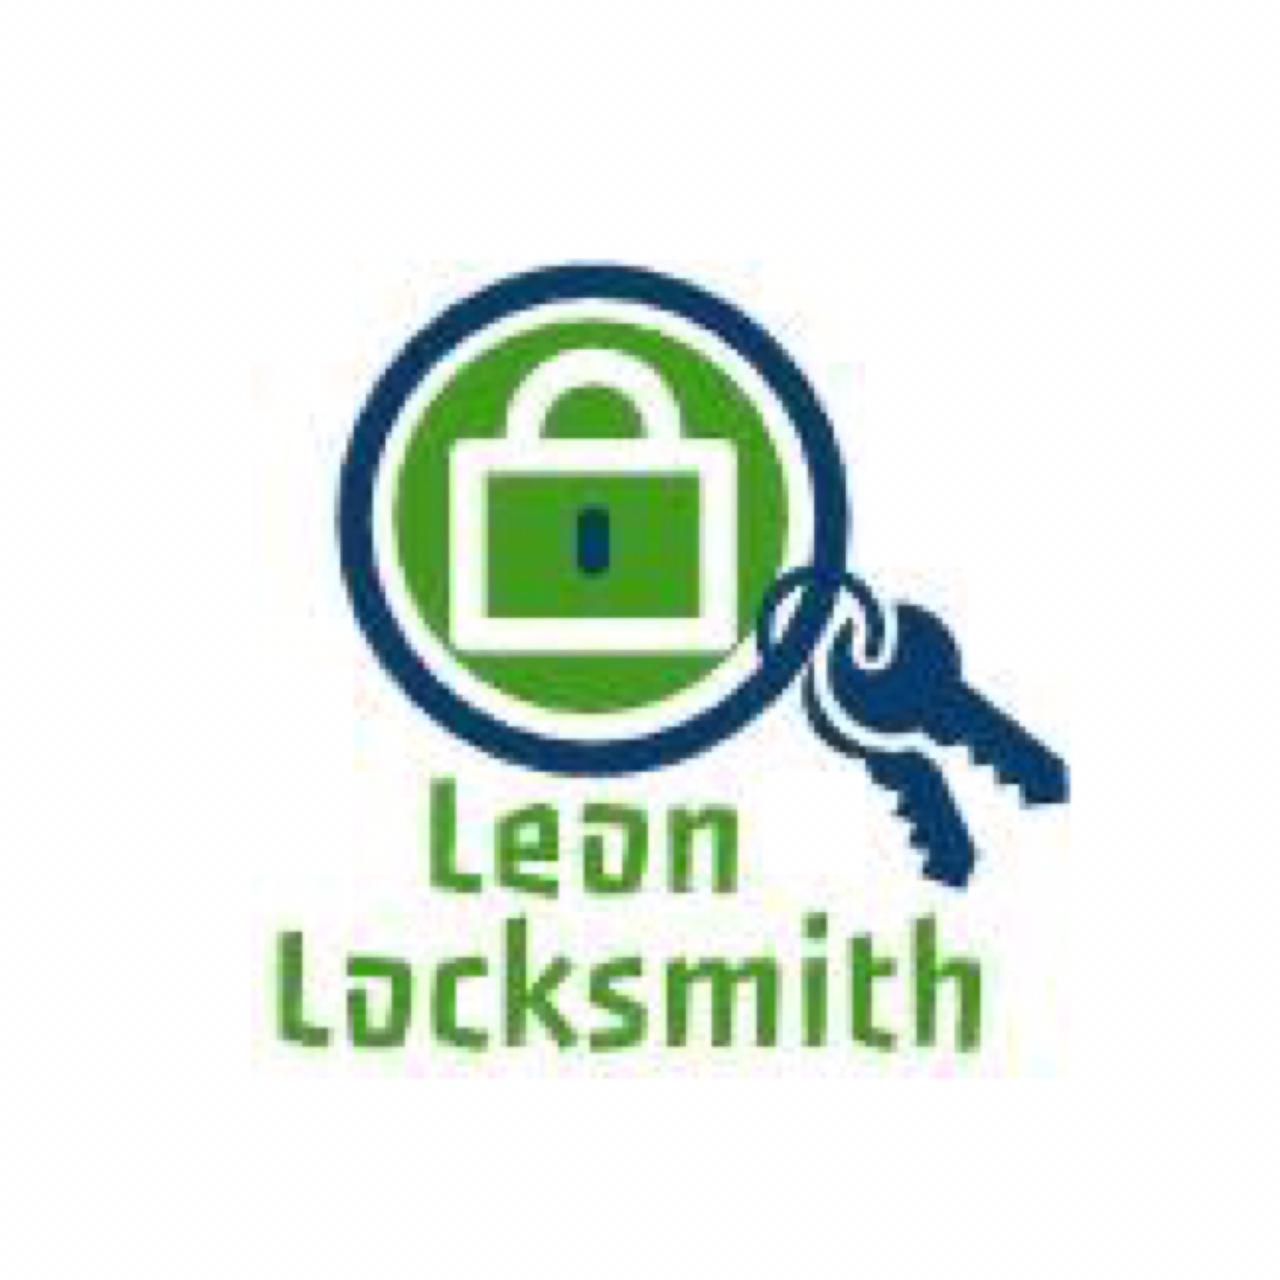 Locksmith